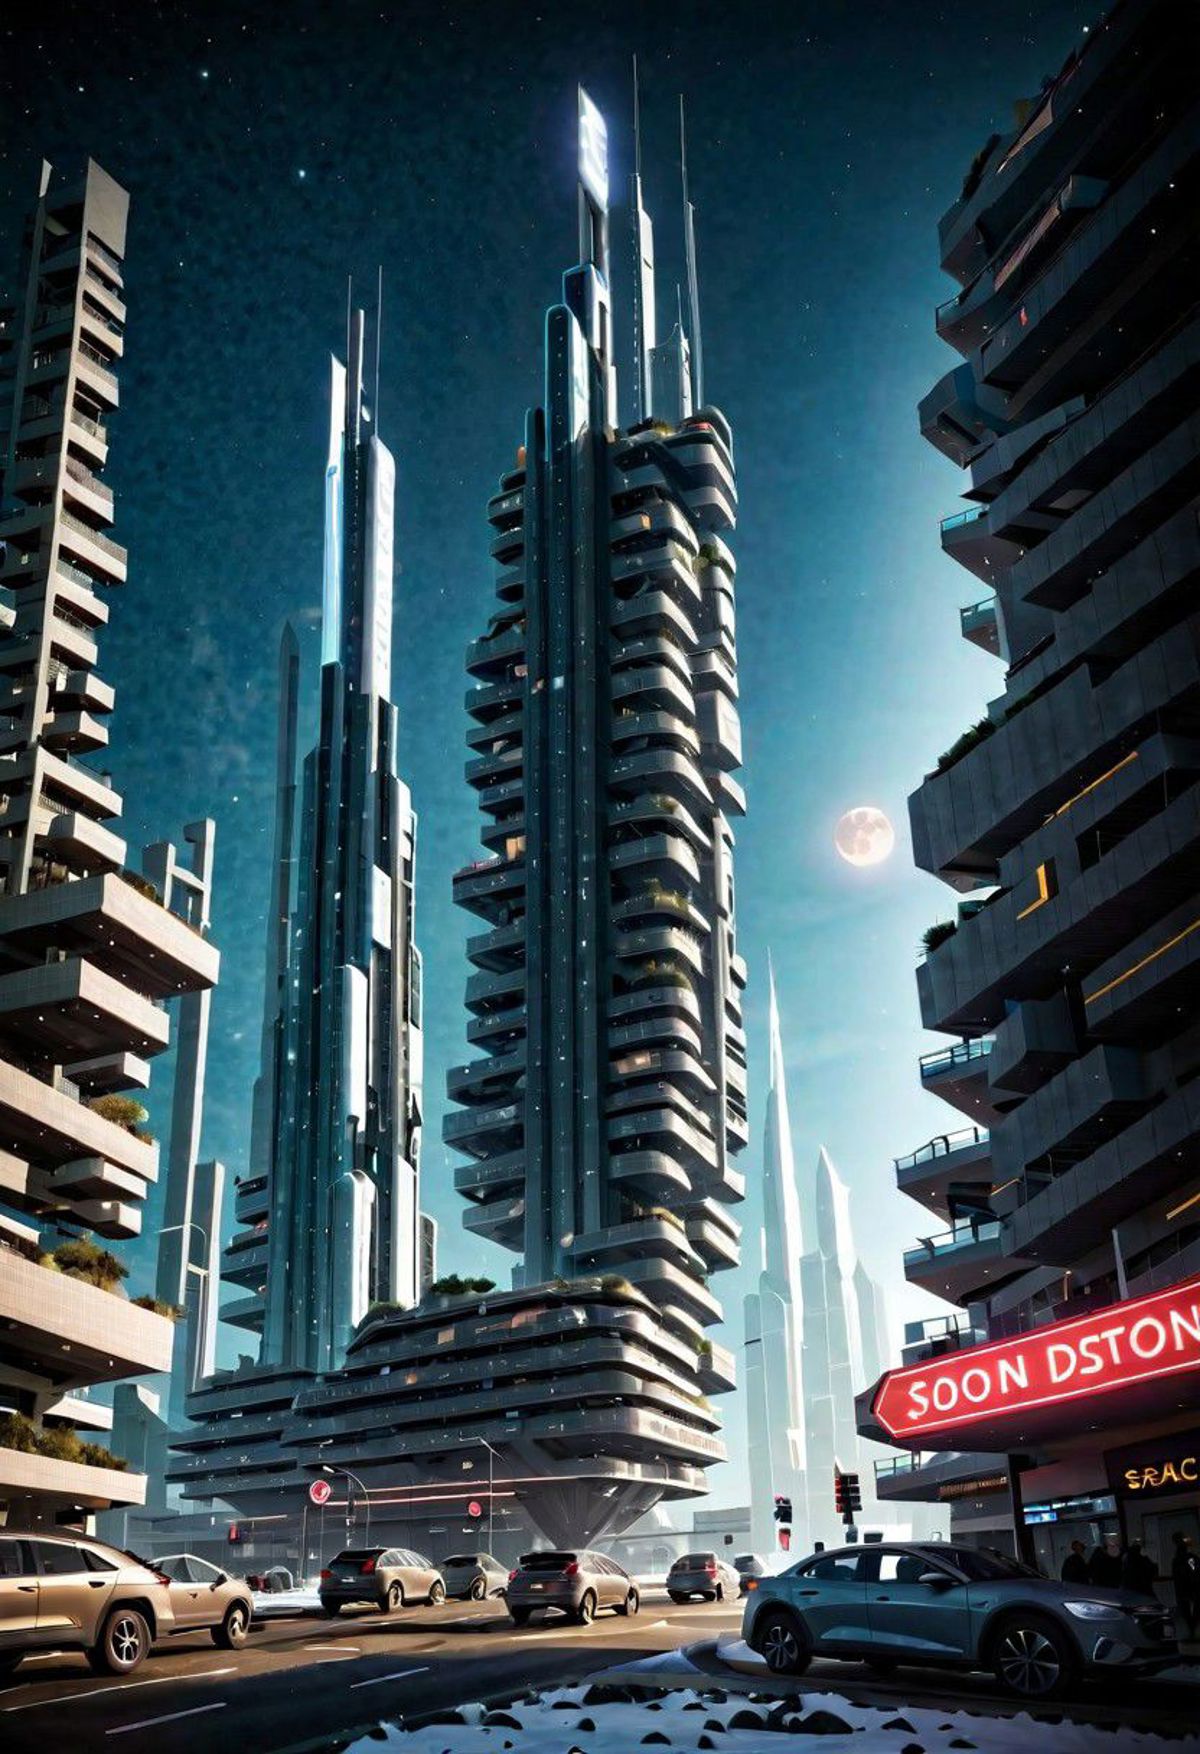 Futuristic cityscape with skyscrapers and a neon sign.